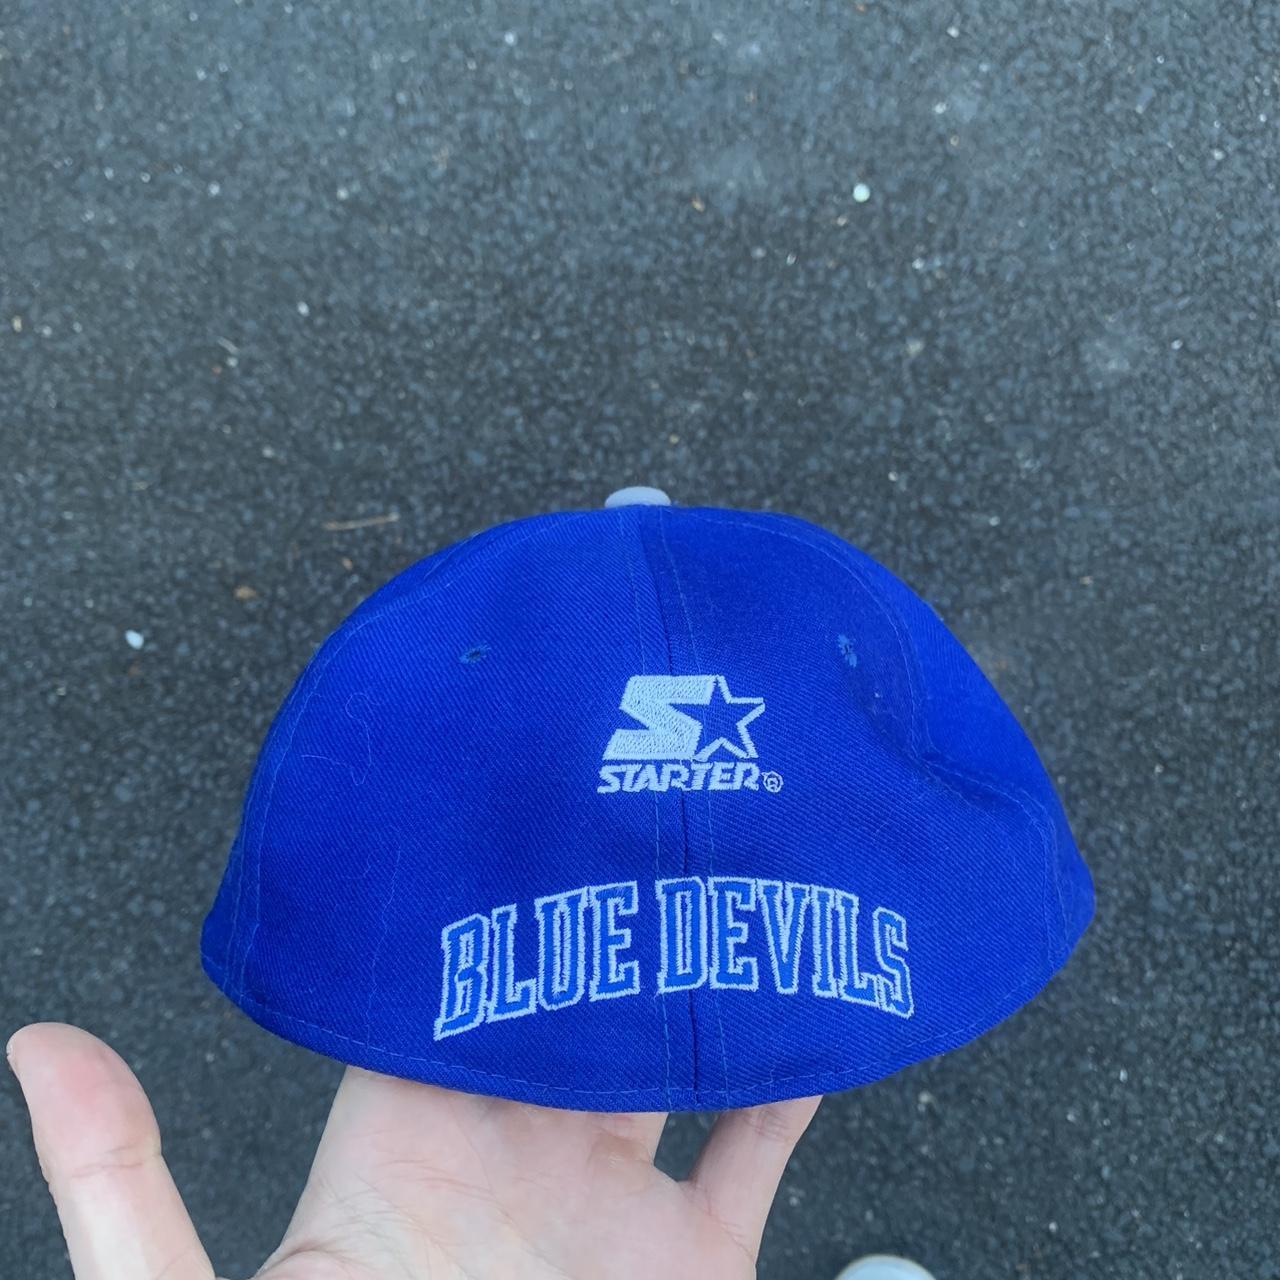 Duke Blue Devils New Era 59 Fitted Hat Size 7 3/8. - Depop